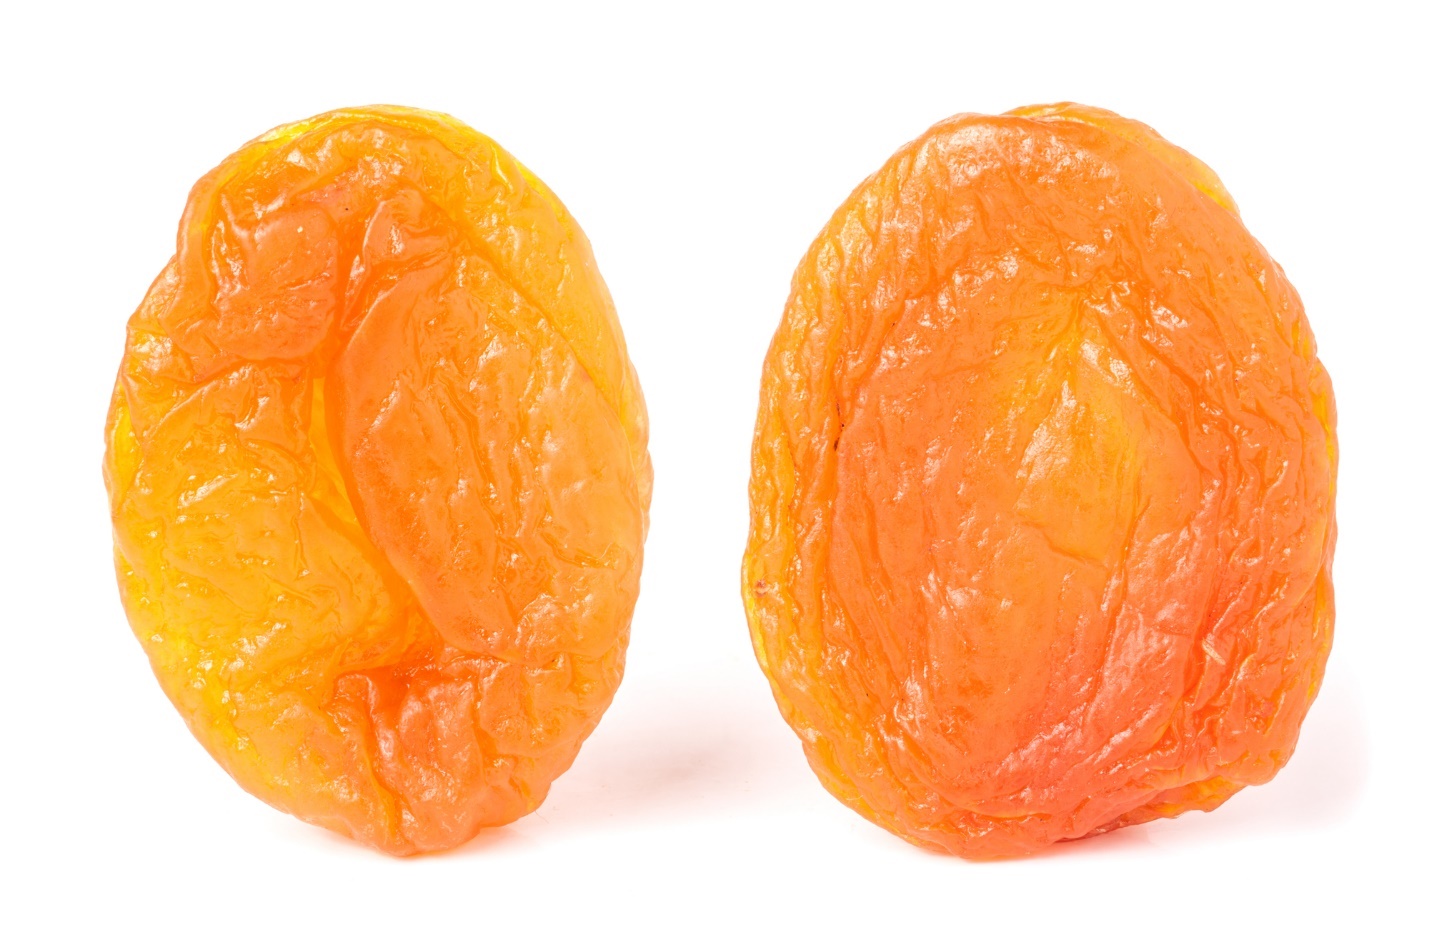 A picture containing dried fruit, fruit, orange, citrus

Description automatically generated